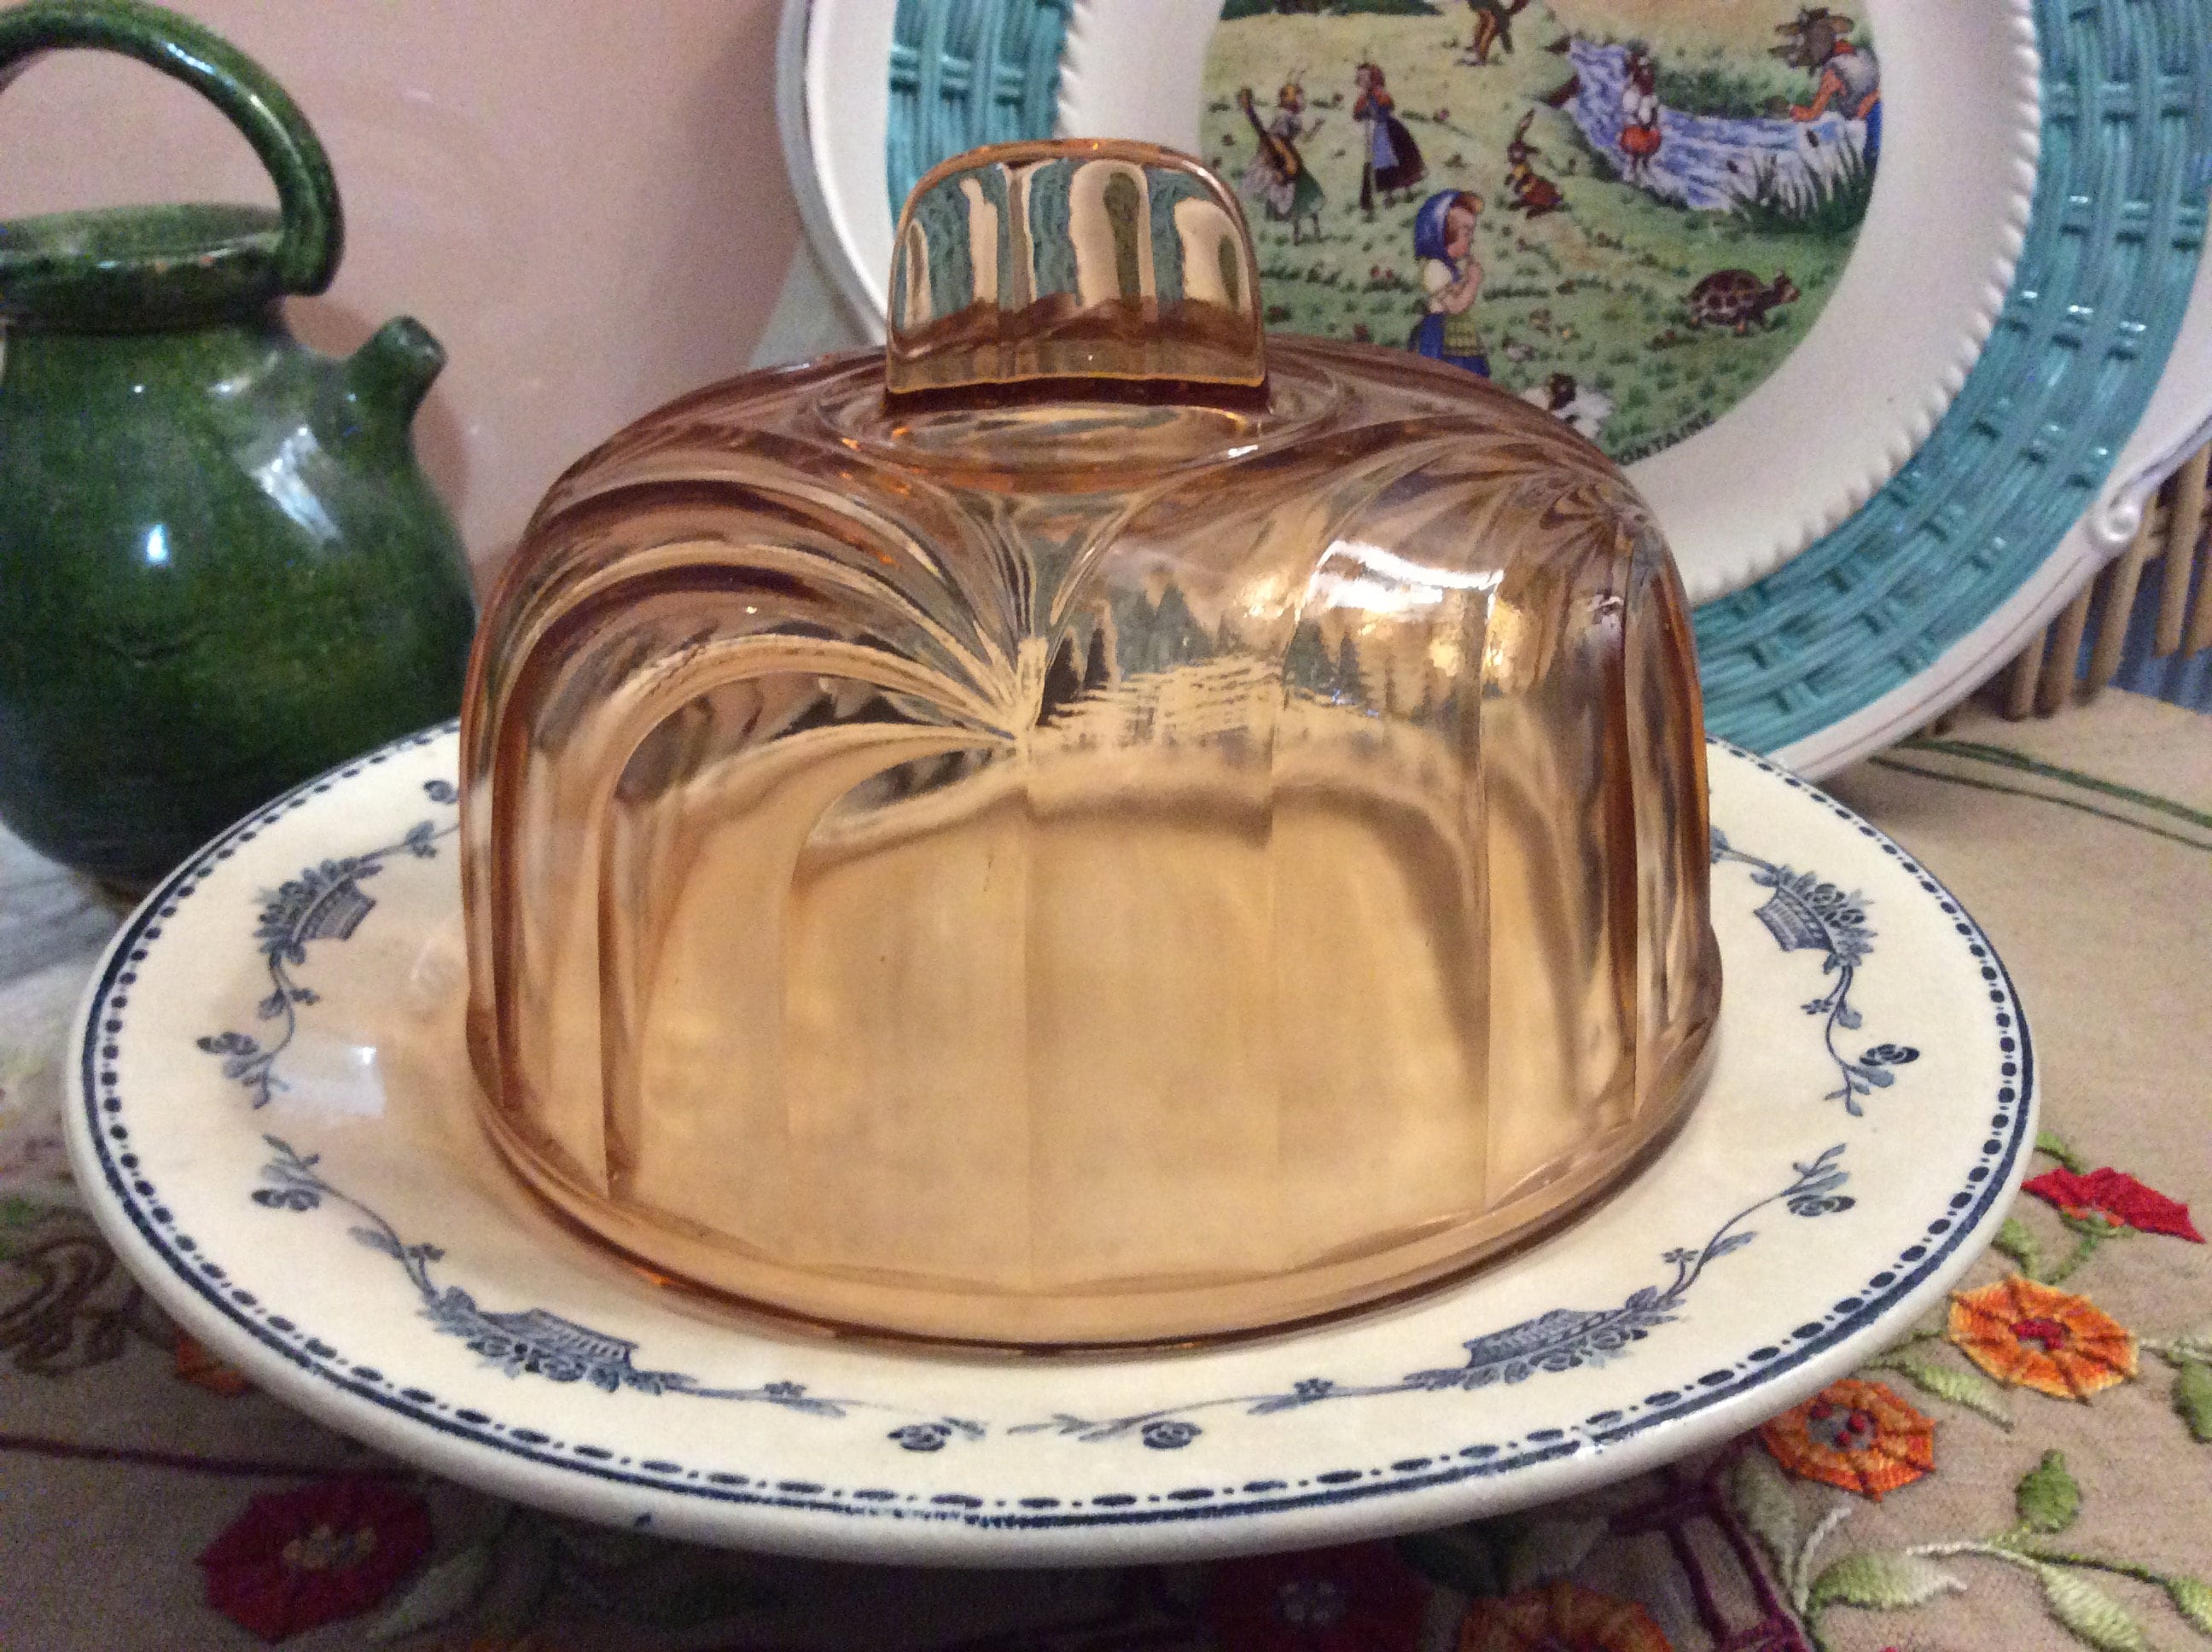 Vintage Pressé Pêche Rose Verre Cloche, Food Display Pink Glass Dome, Cake Display